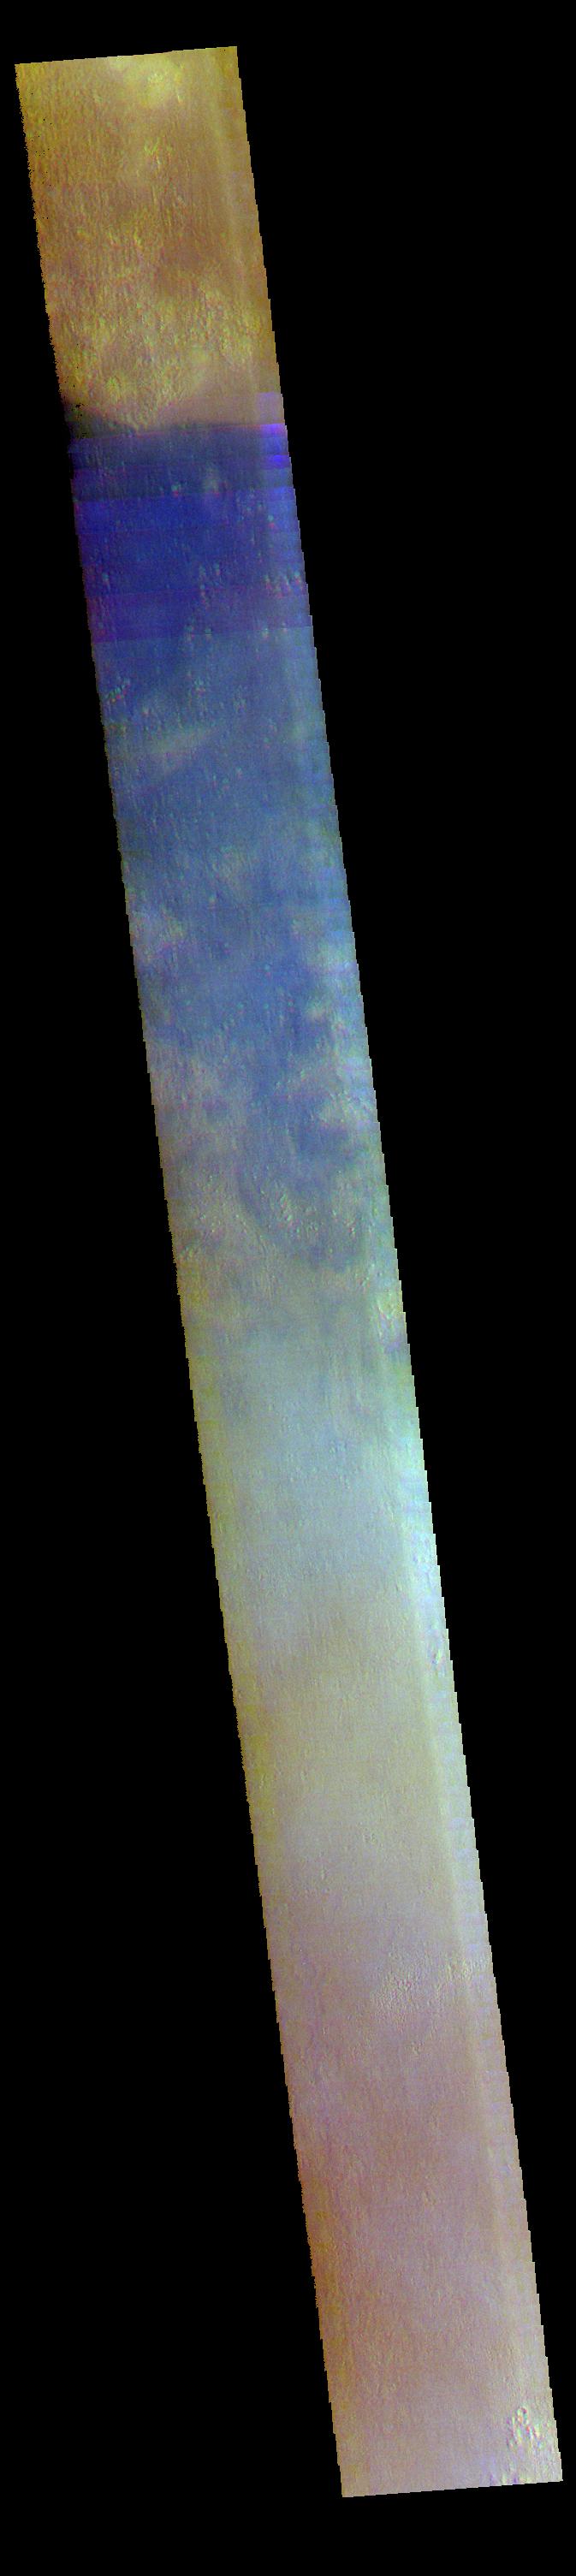 PIA22715: Amazonis Planitia - False Color